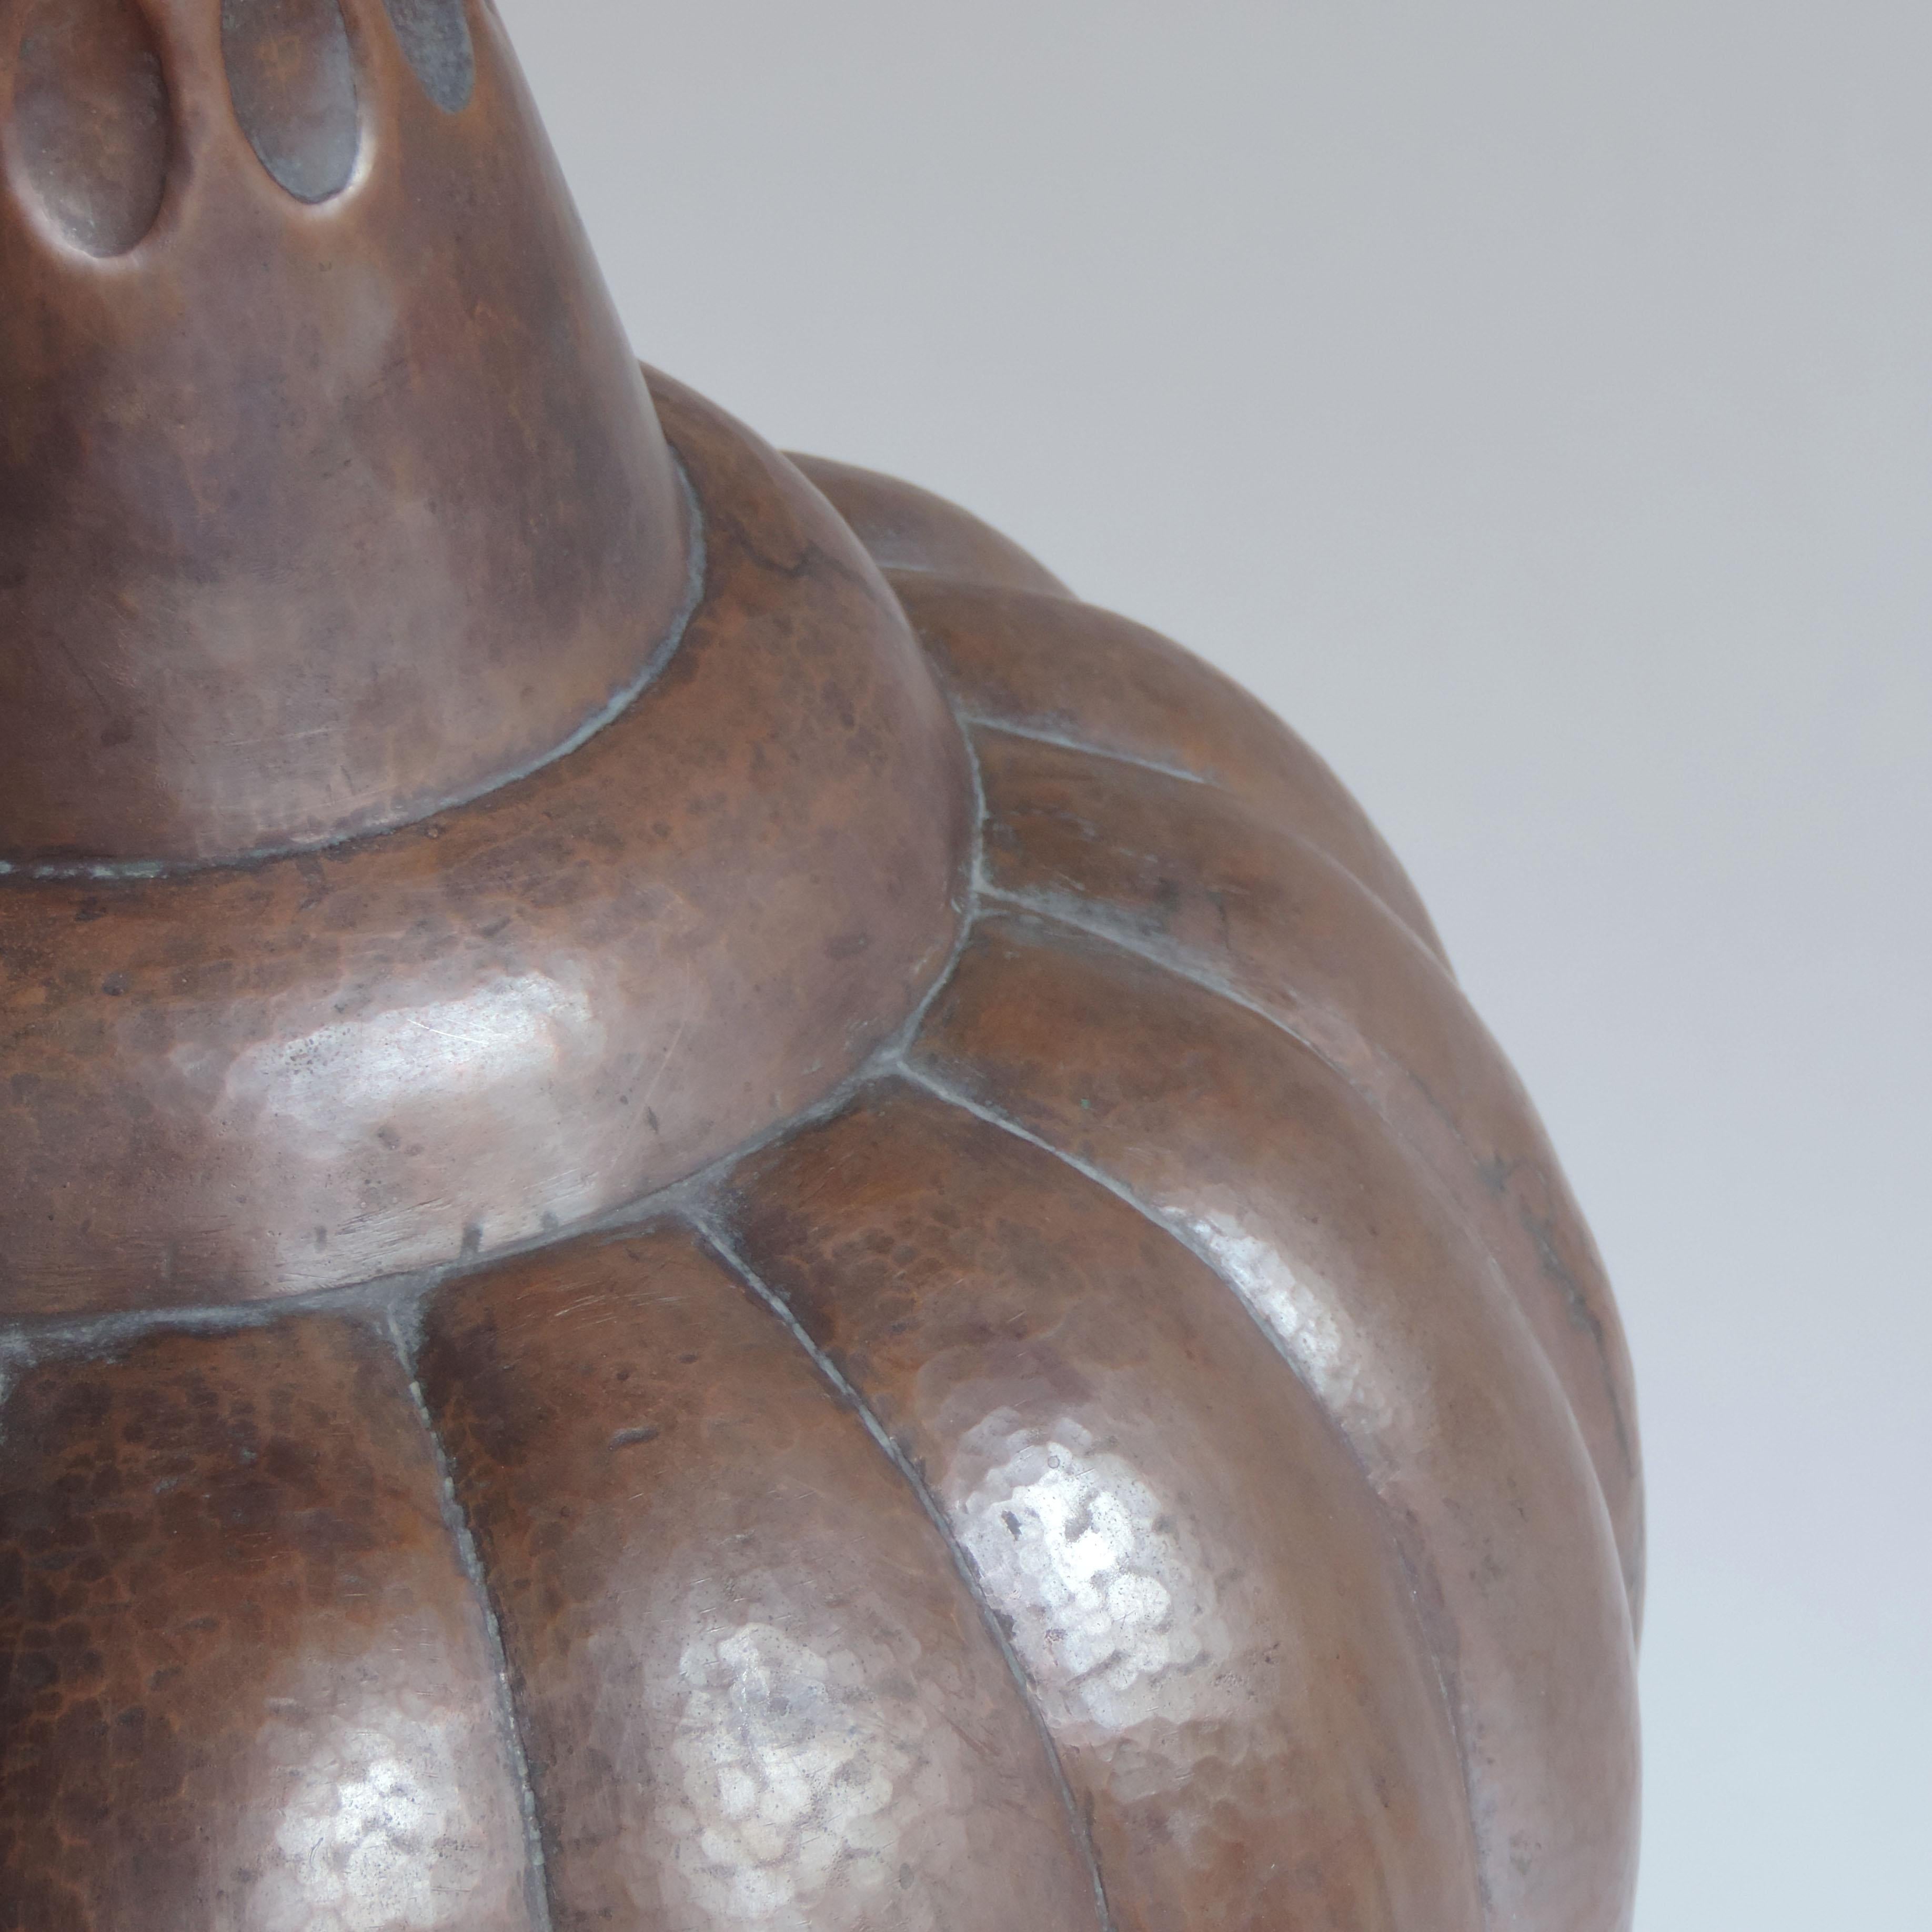 Monumental Vittorio Zecchin hammered copper vase, Italy, 1925
Manufactured for E.N.A.P.I.
Contains a pewter inner vase for flowers
Reference :
- Vittorino Zecchin 1878-1947: pittura, arte, vetri, arti decorative, image 391.
- Domus 05/1925.